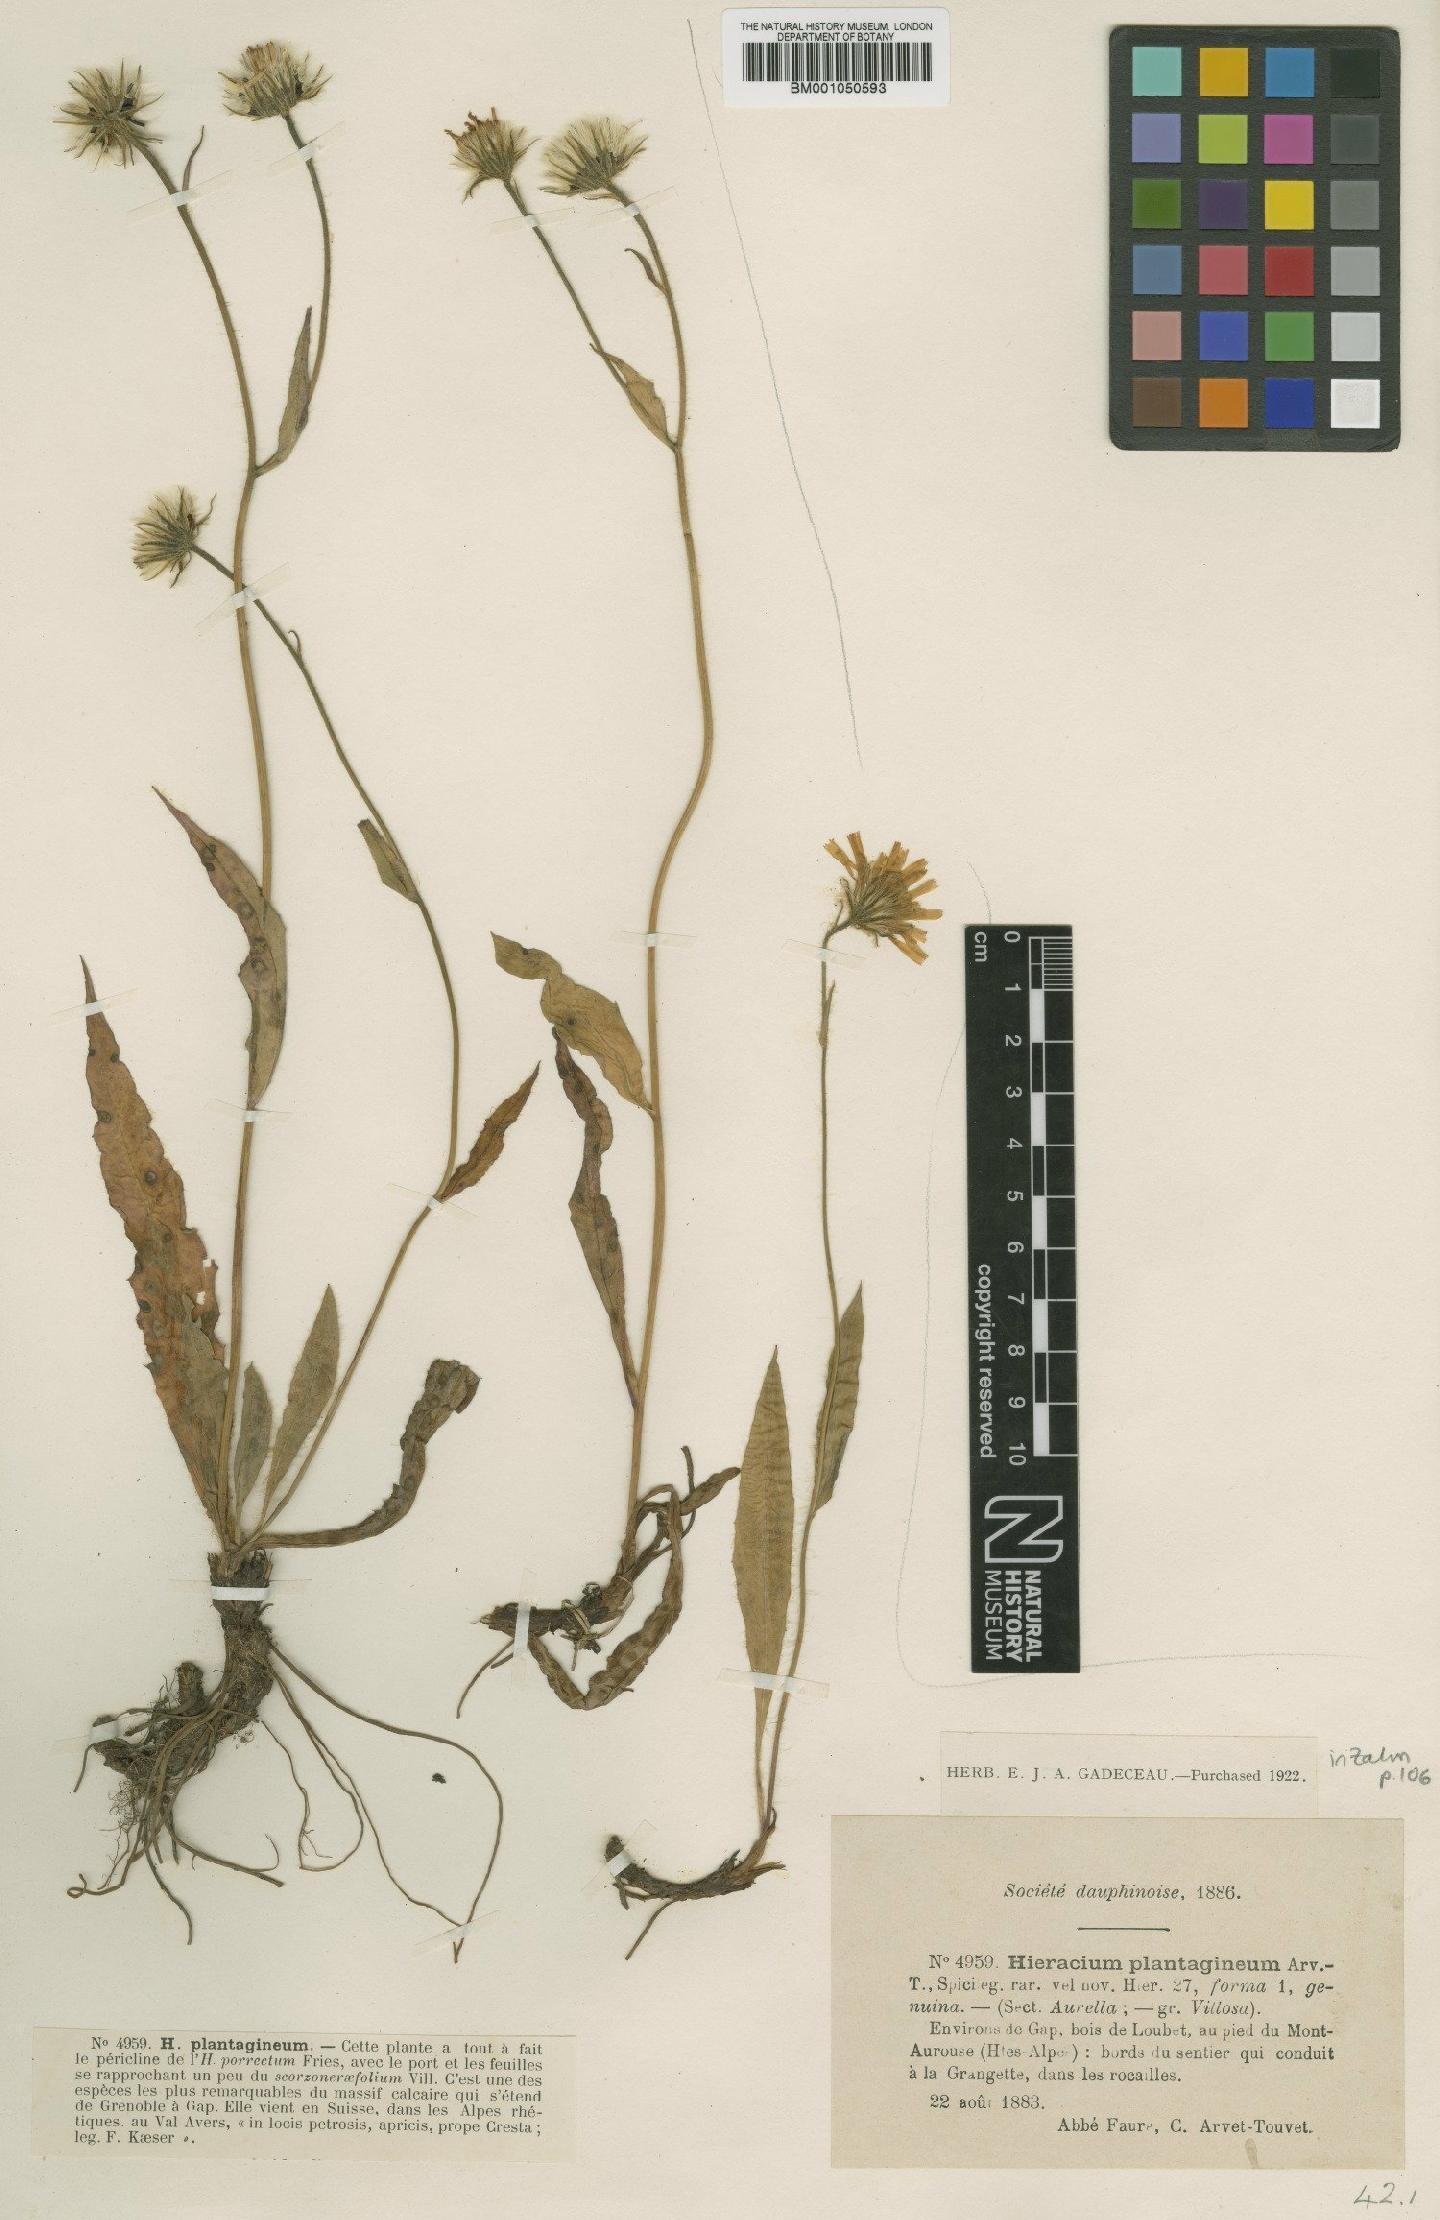 To NHMUK collection (Hieracium plantagineum (Arv.-Touv.) Arv.-Touv.; TYPE; NHMUK:ecatalogue:2396278)